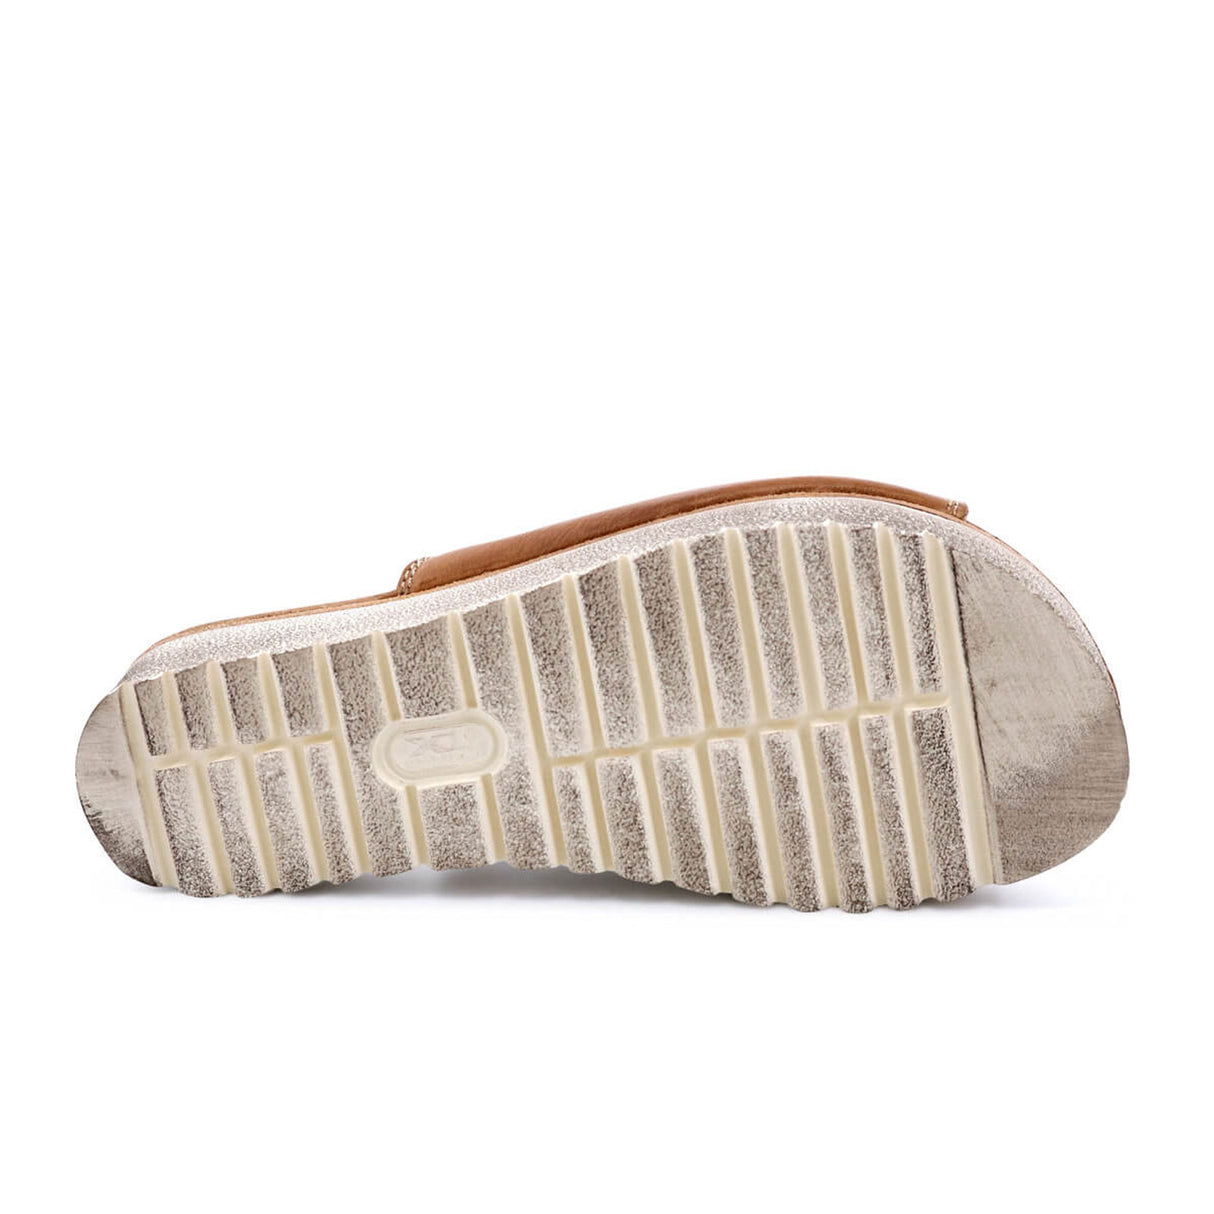 Bed Stu Fairlee II Slide Sandal (Women) - Tan Rustic Sandals - Slide - The Heel Shoe Fitters